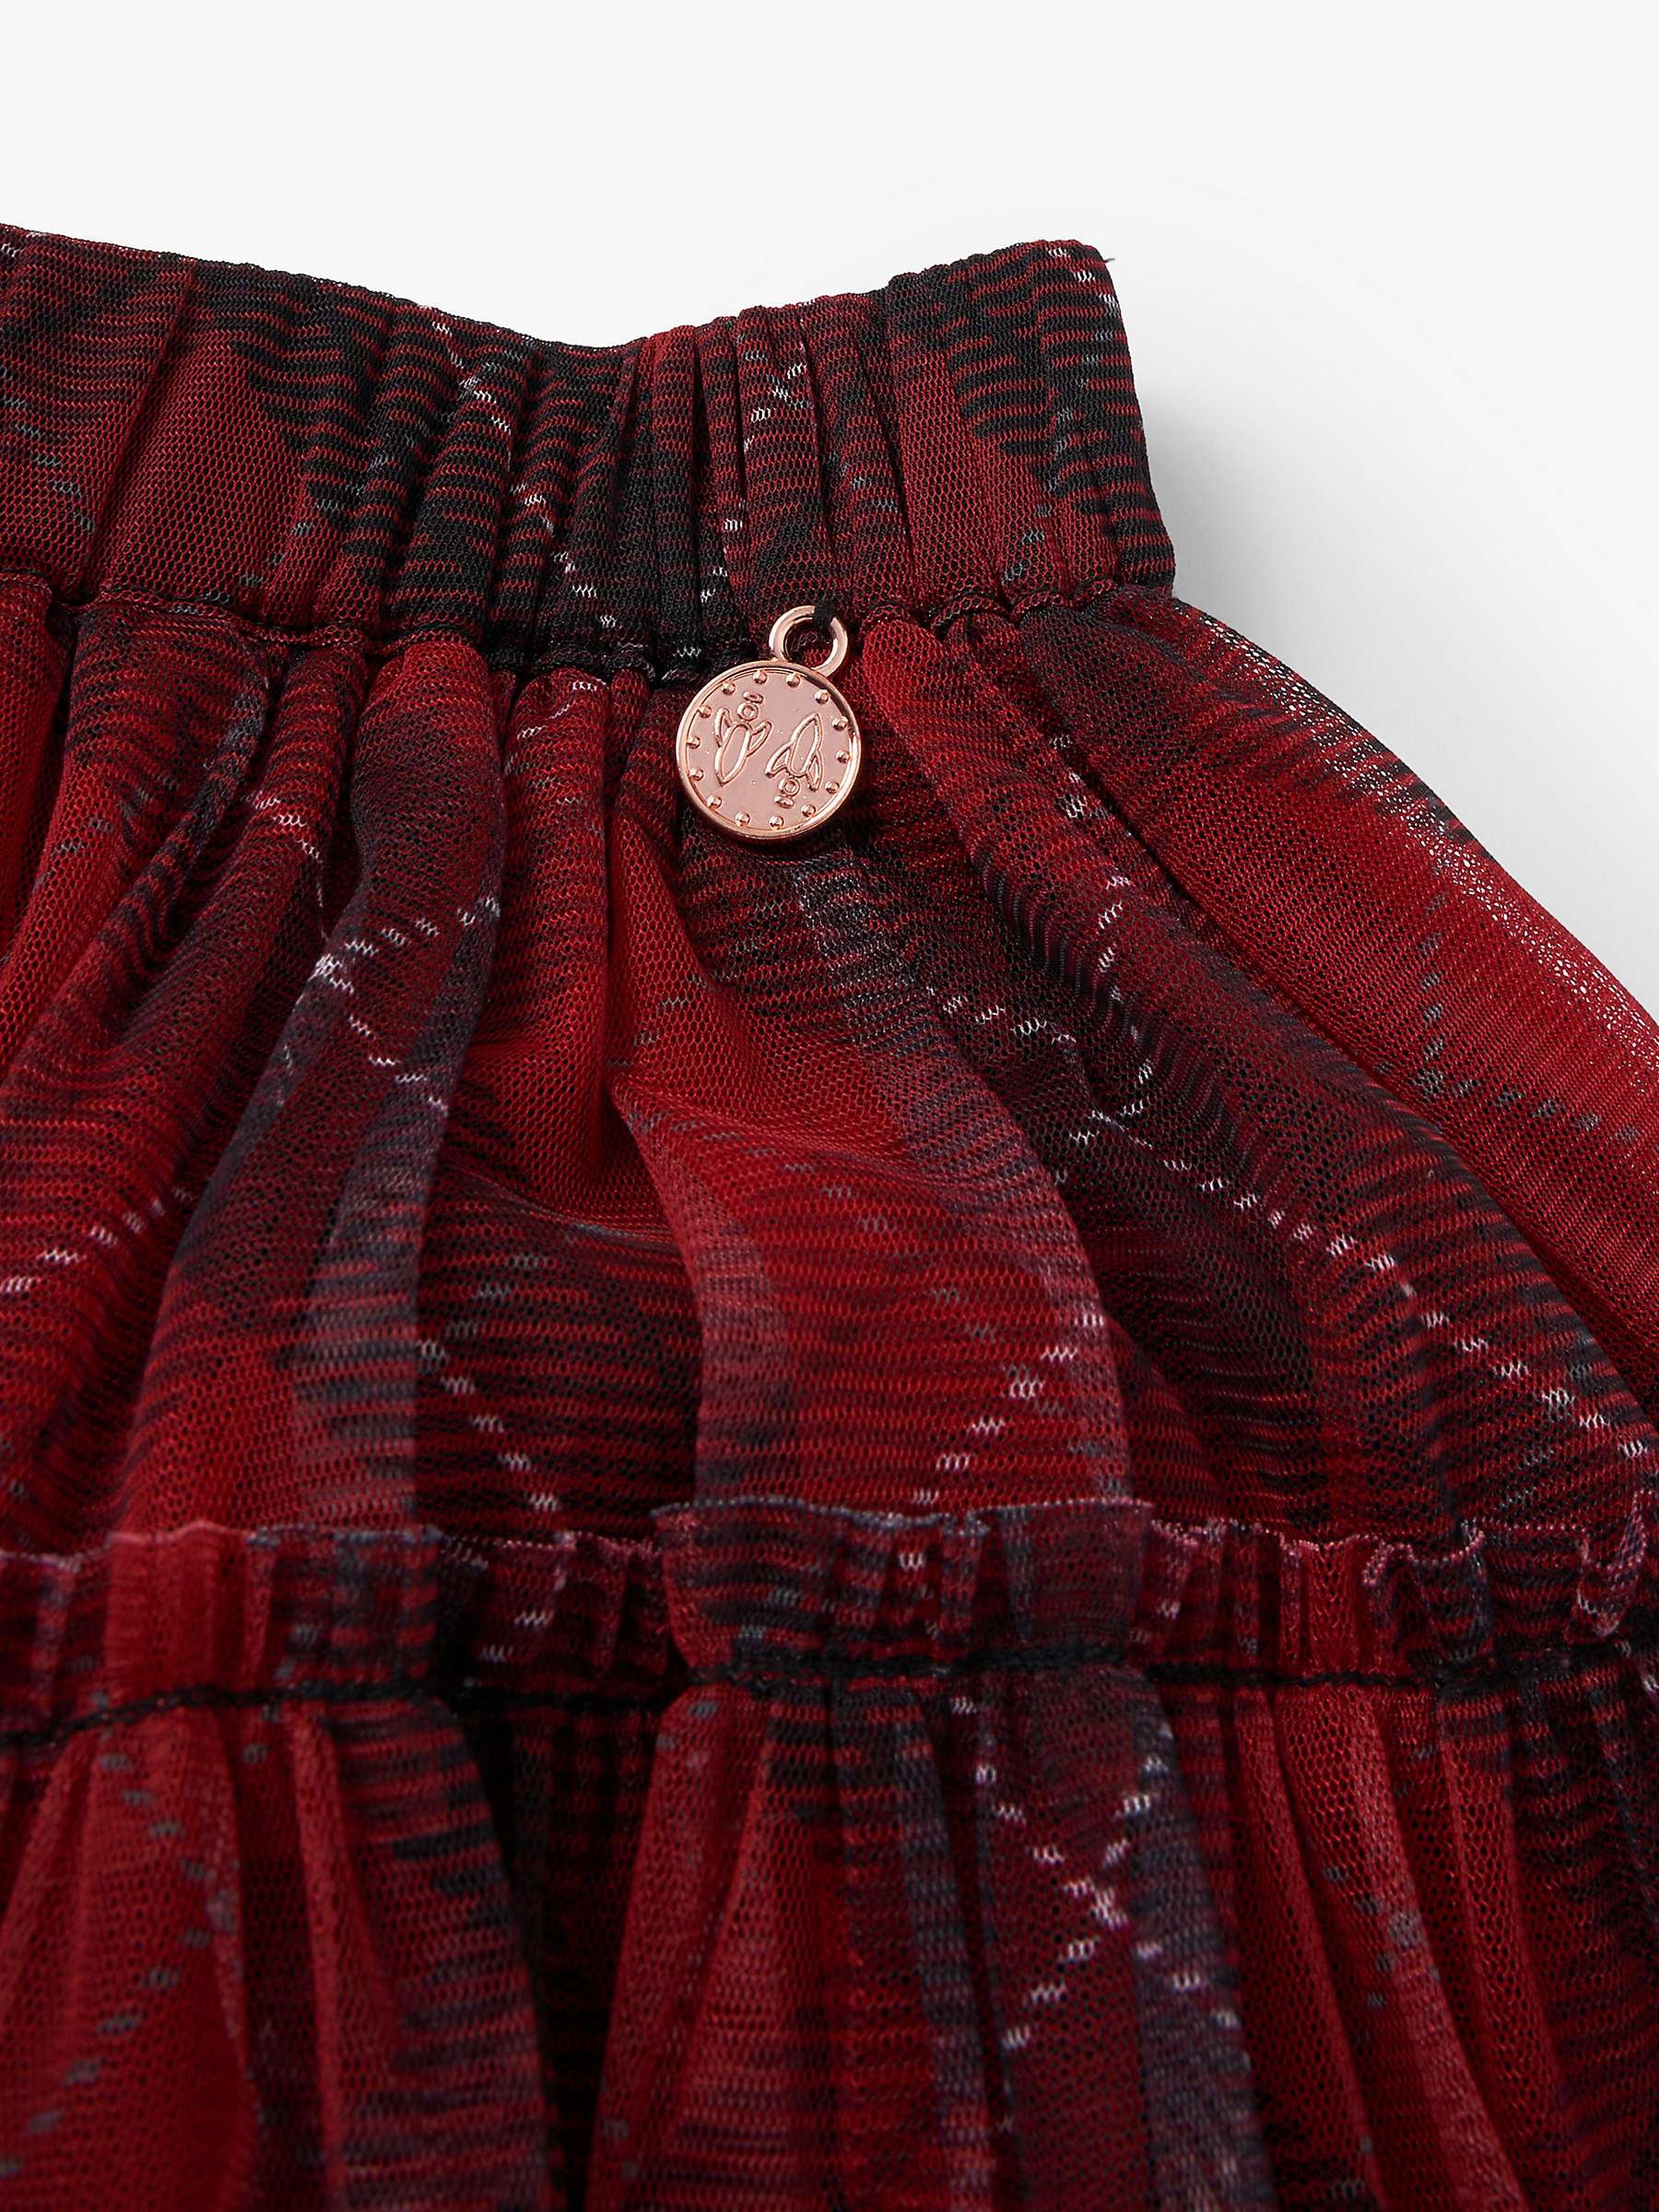 Buy Angel & Rocket Kids' Tartan Print Mesh Skirt, Red/Multi Online at johnlewis.com